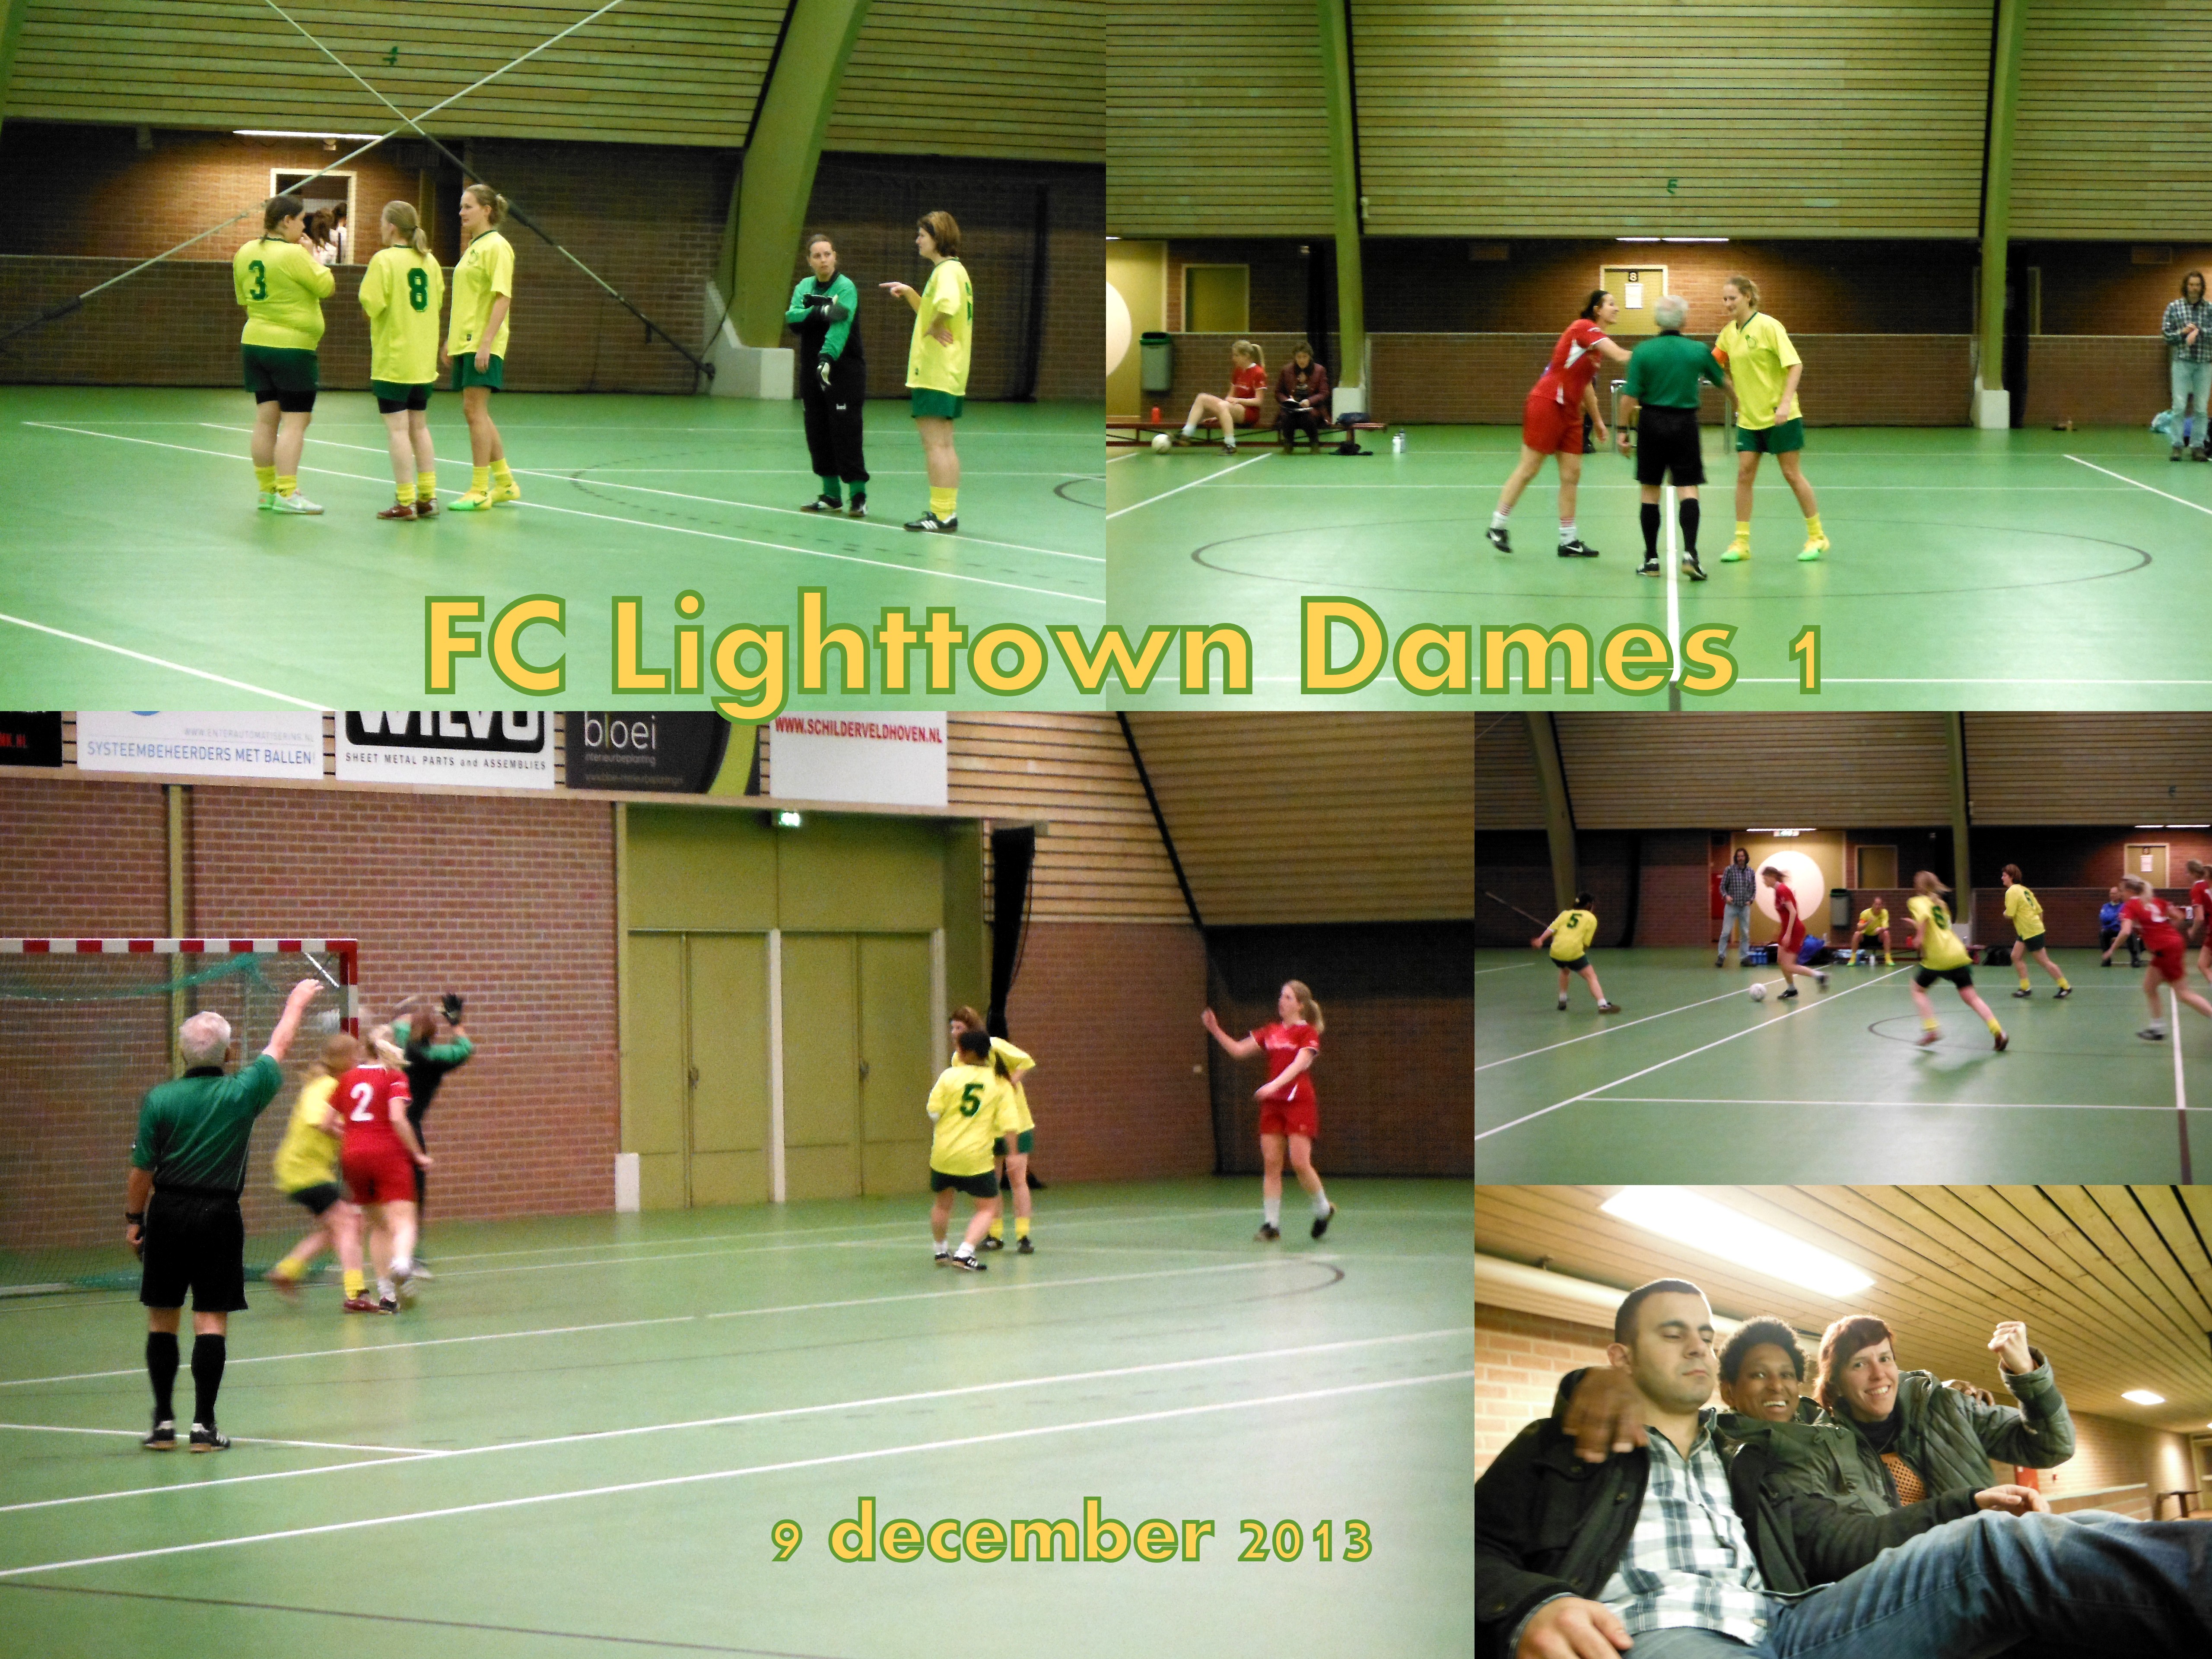 2013-12-09 FC Lighttown dames 1 en supporters